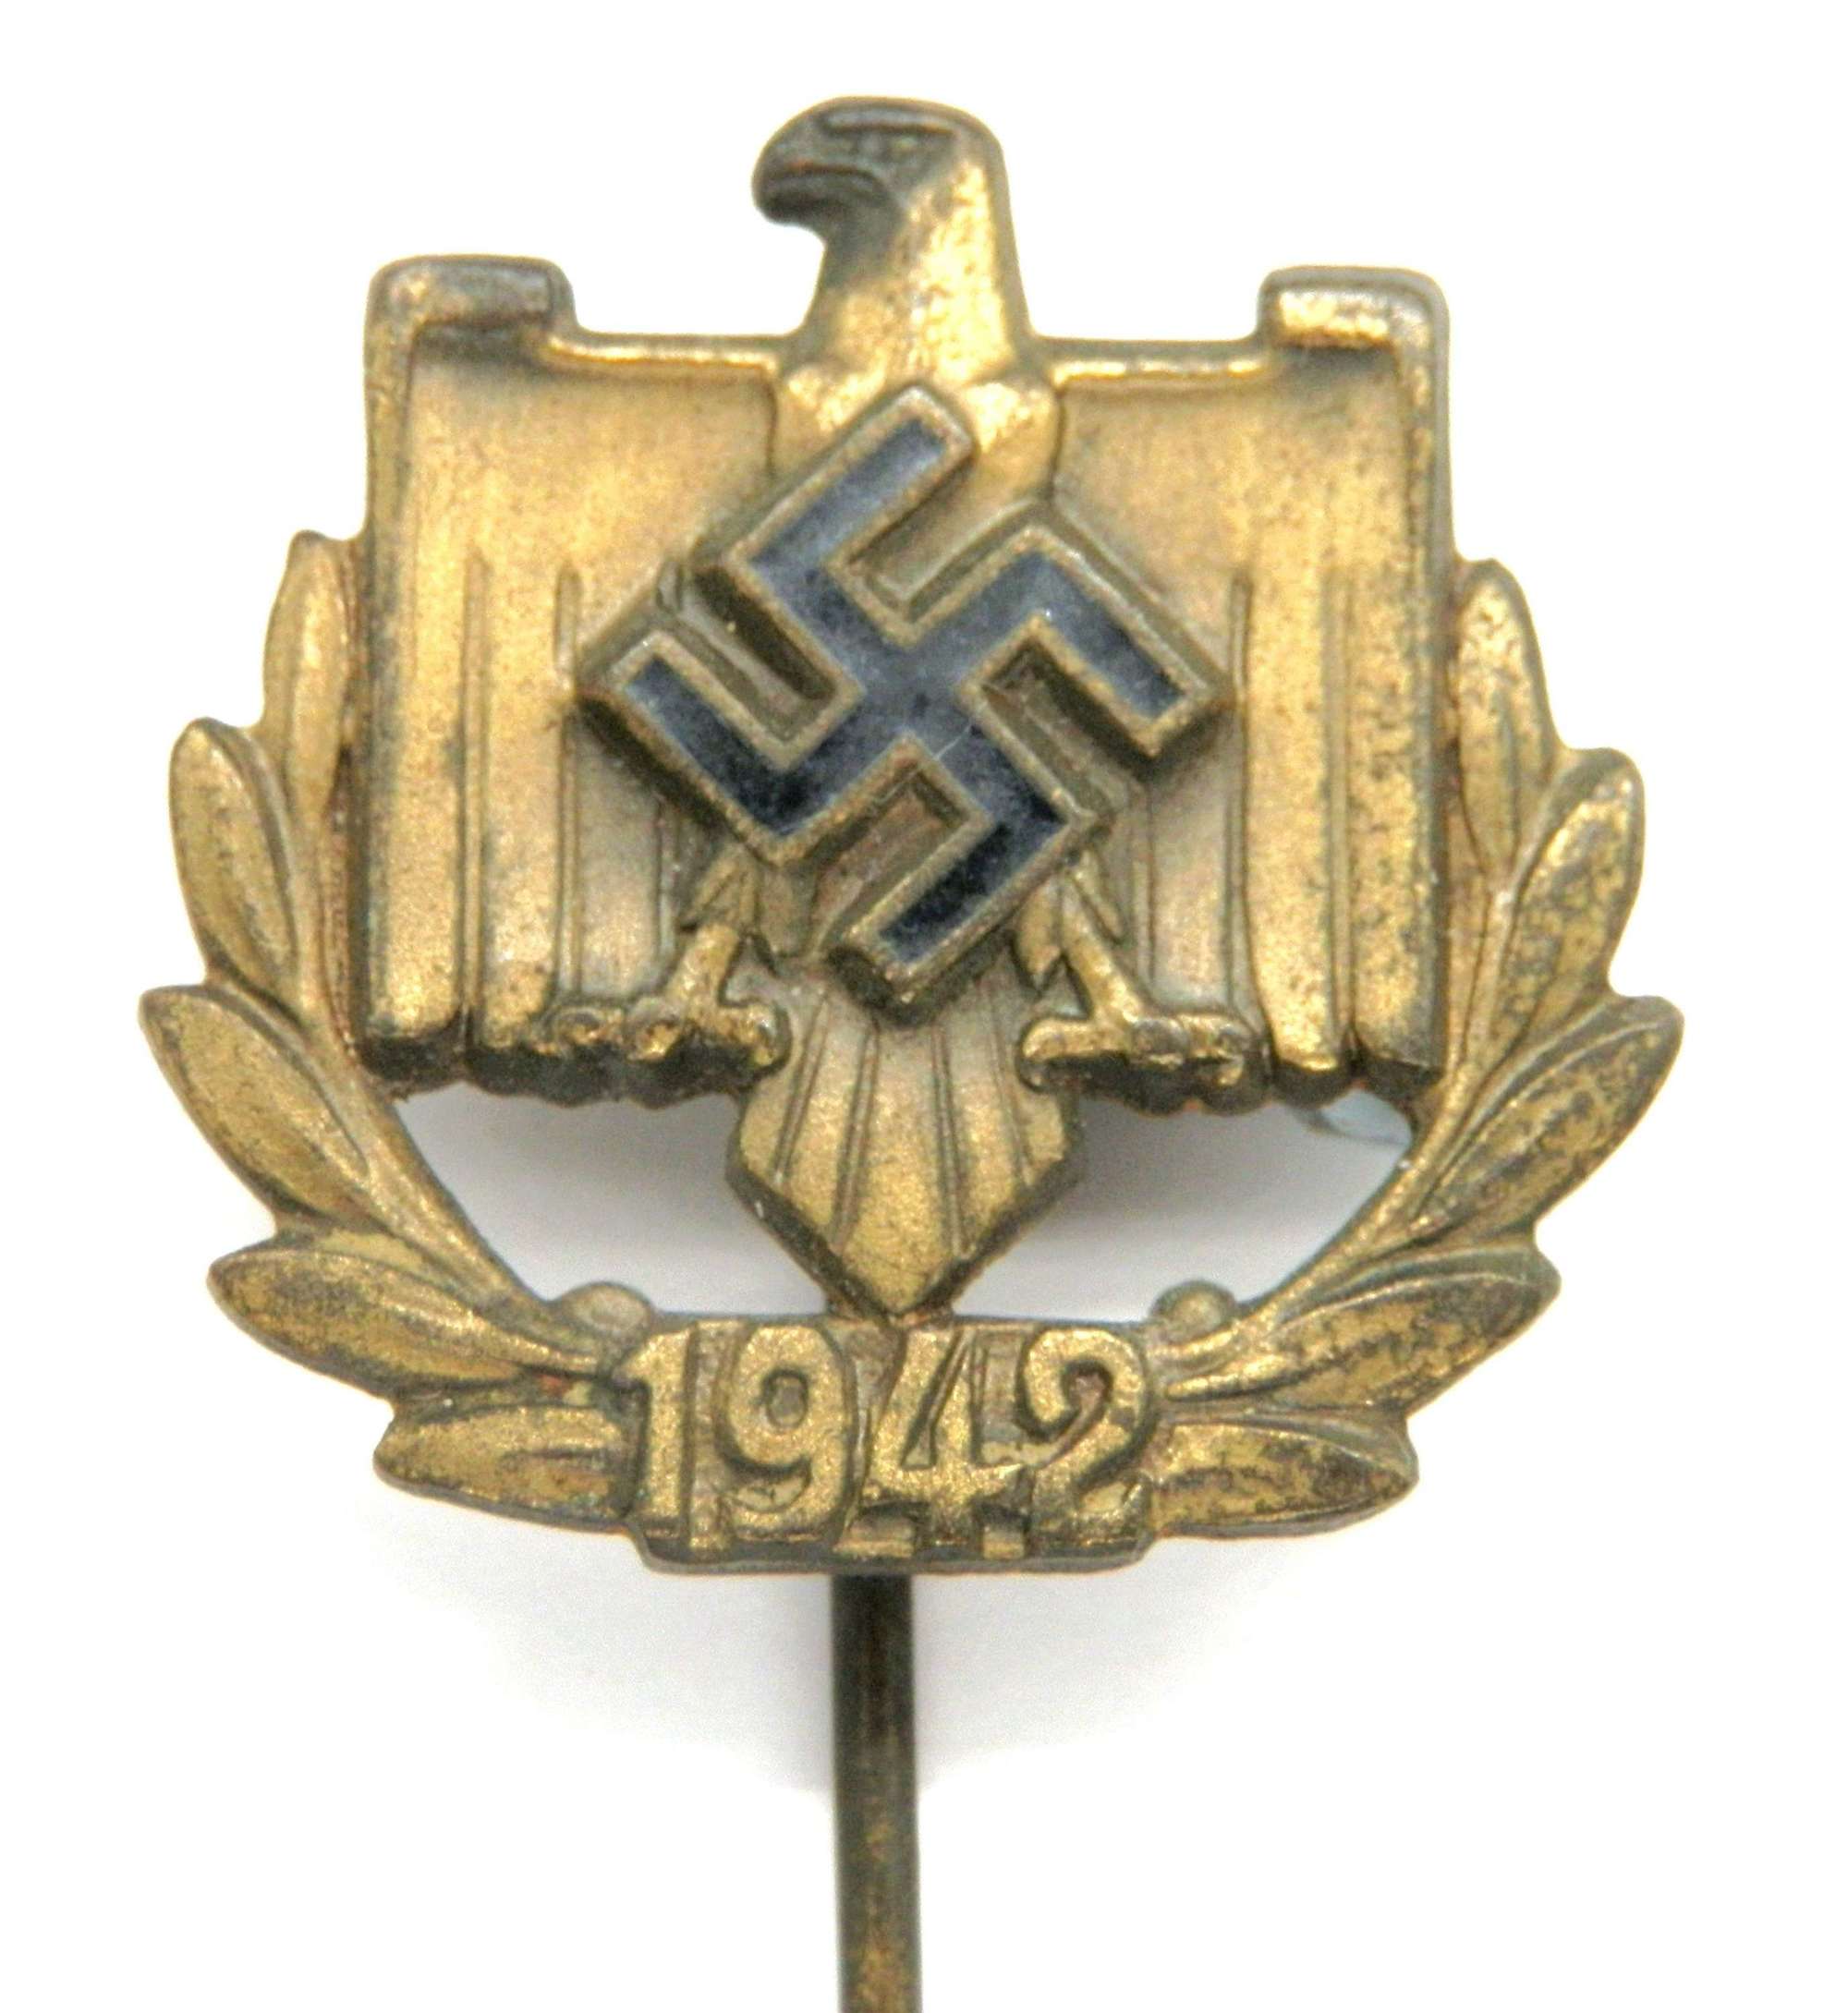 1942 NSRL Sports Association Lapel Badge.